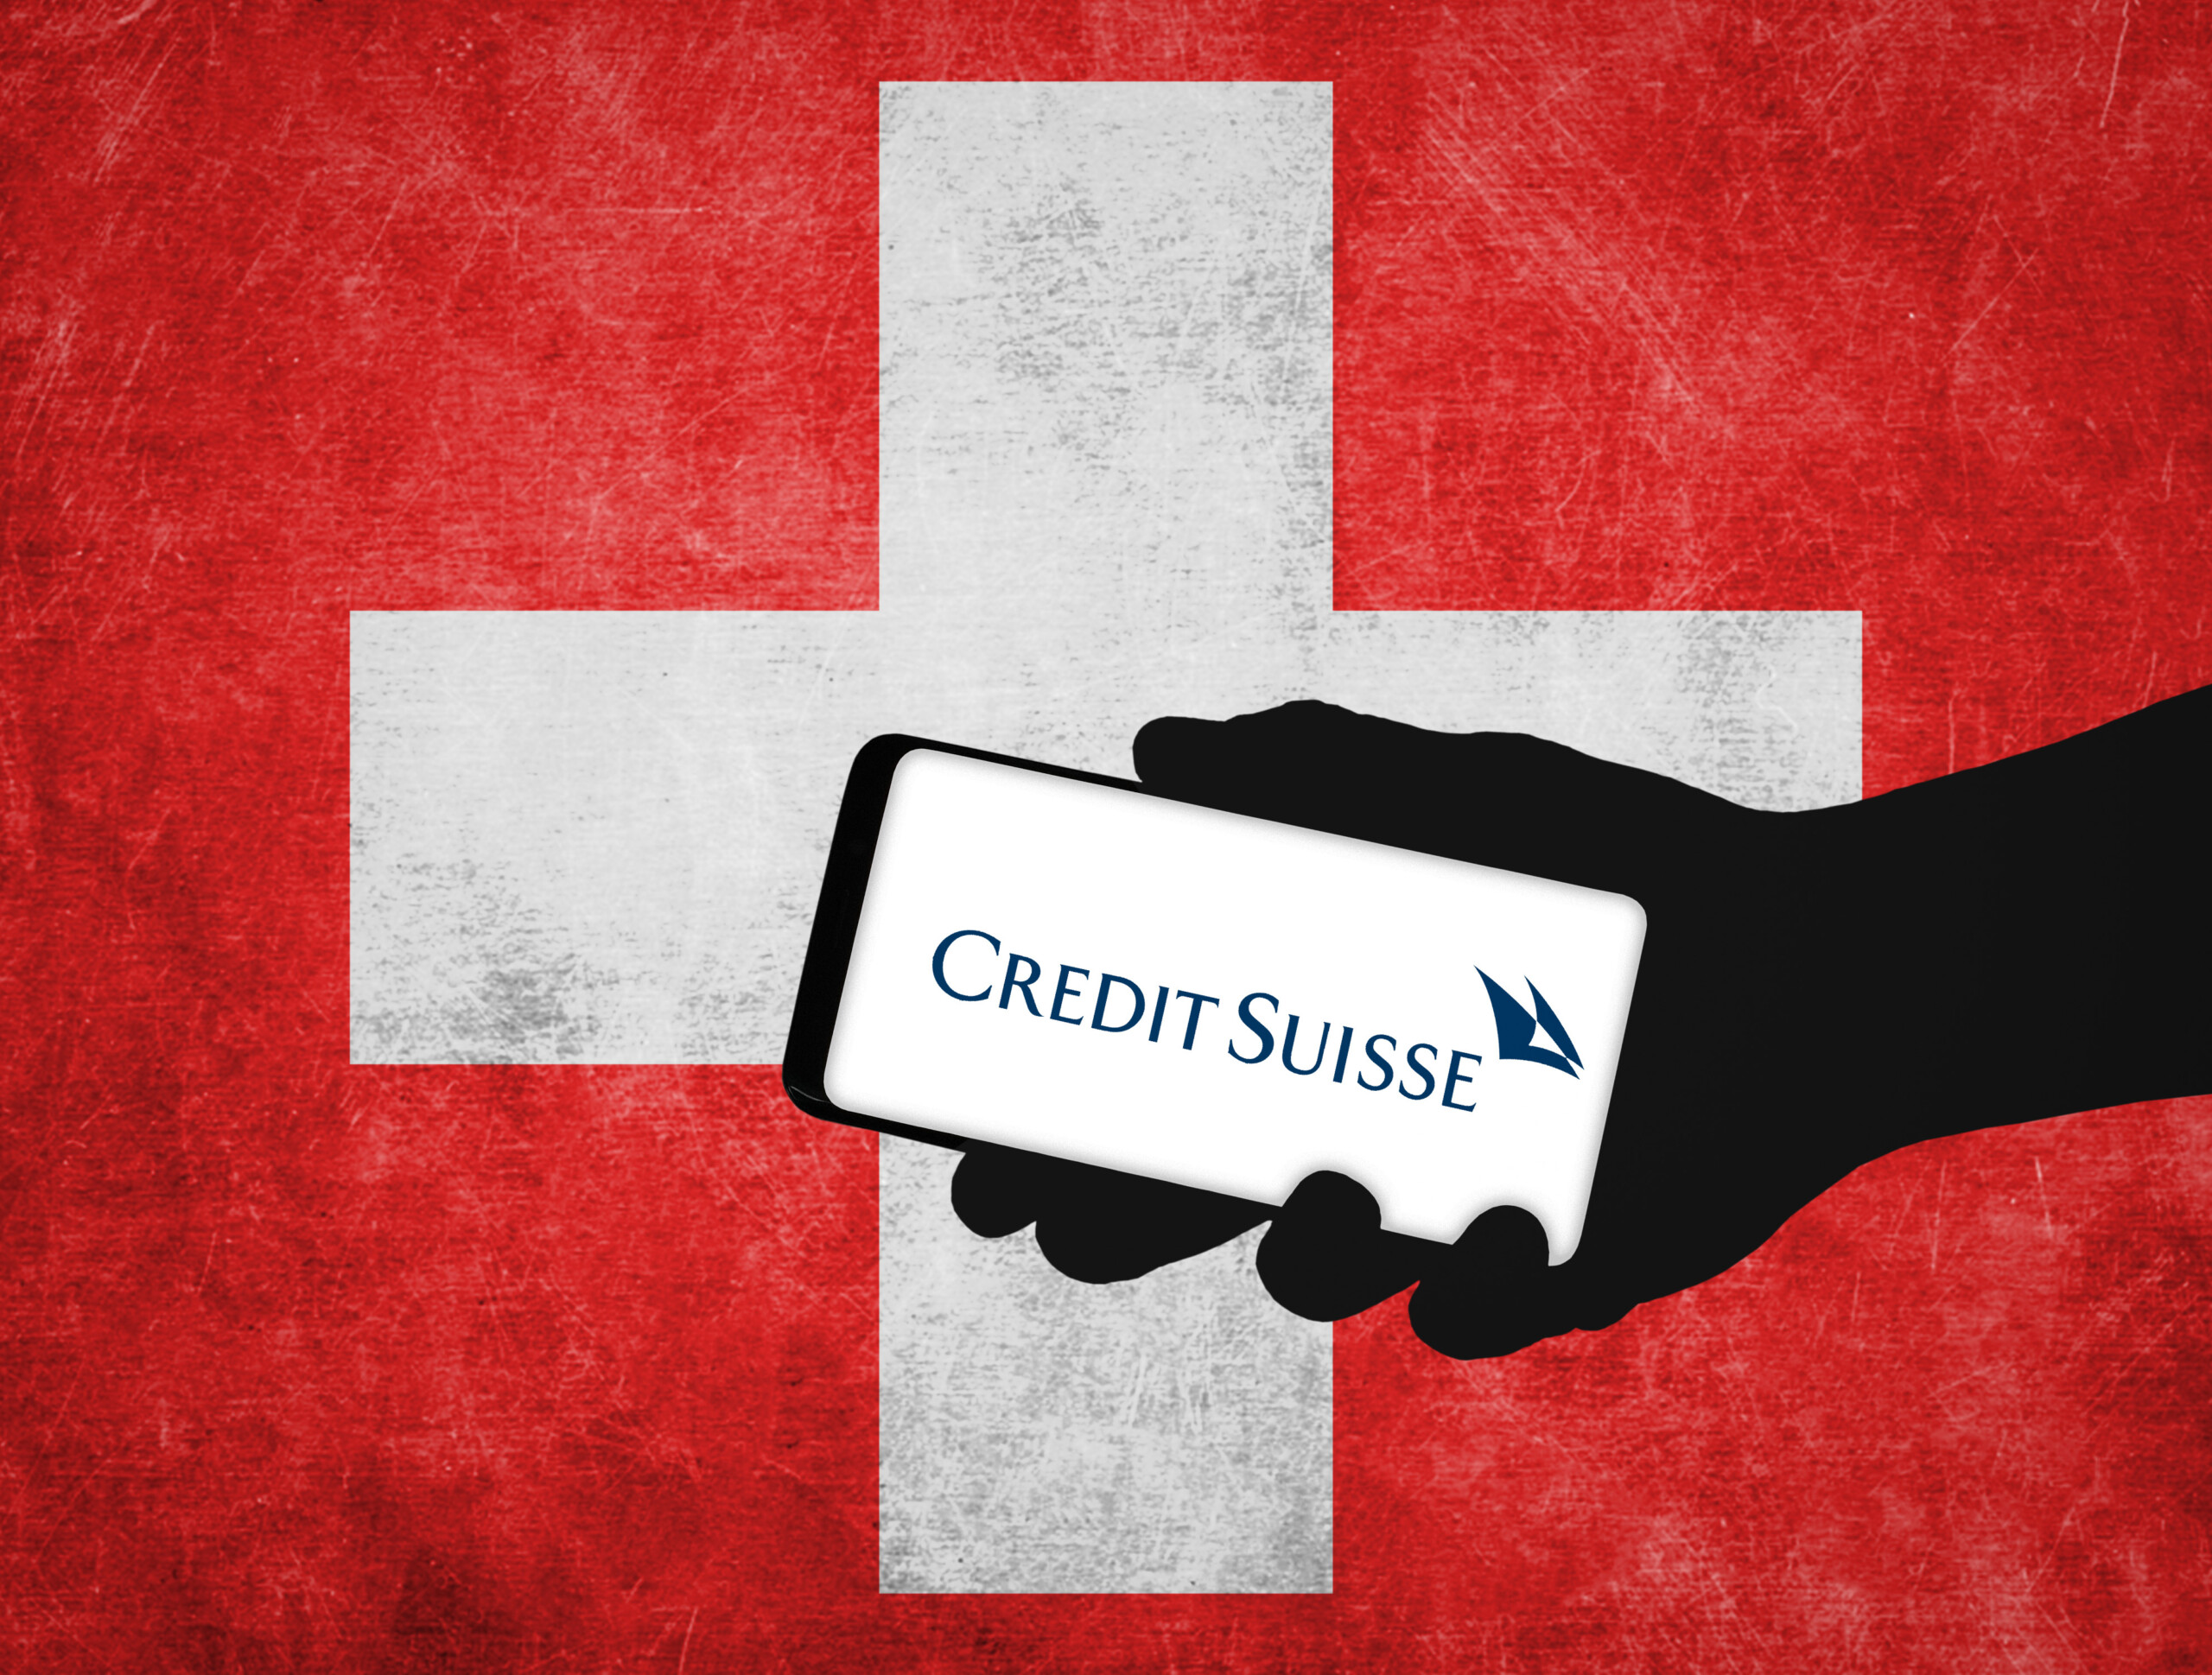 Credit Suisse - investment bank in Switzerland